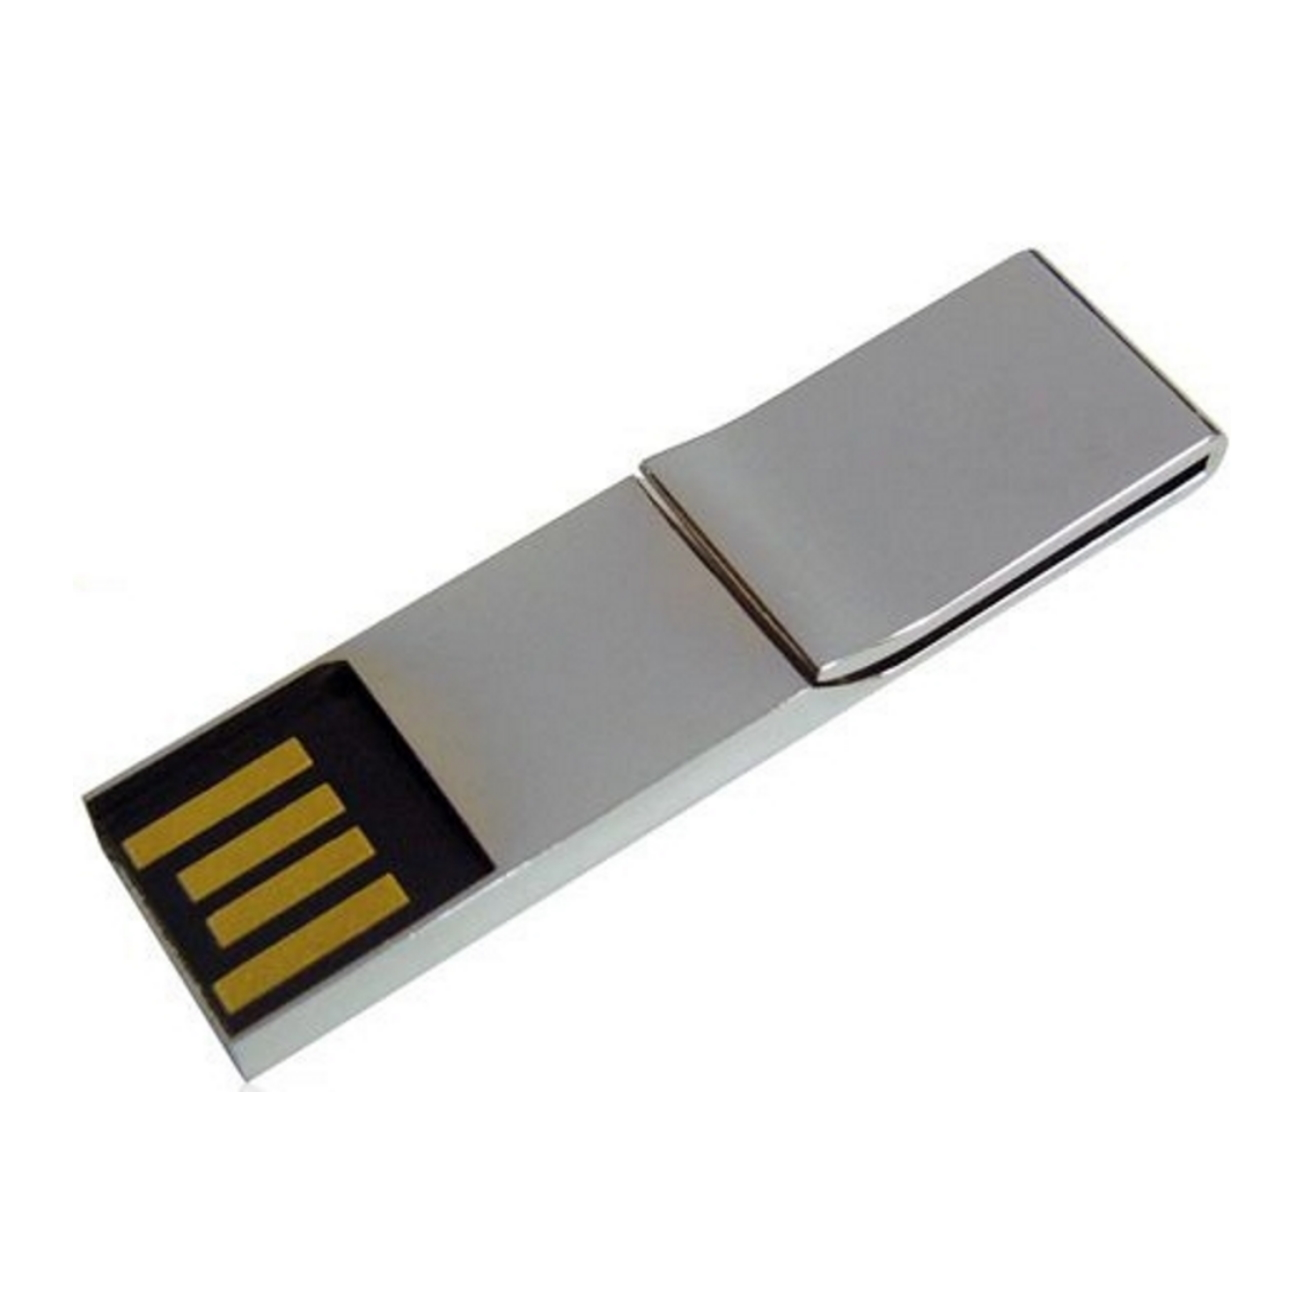 GB) 4 paperClip ® GERMANY USB (Chrome, USB-Stick